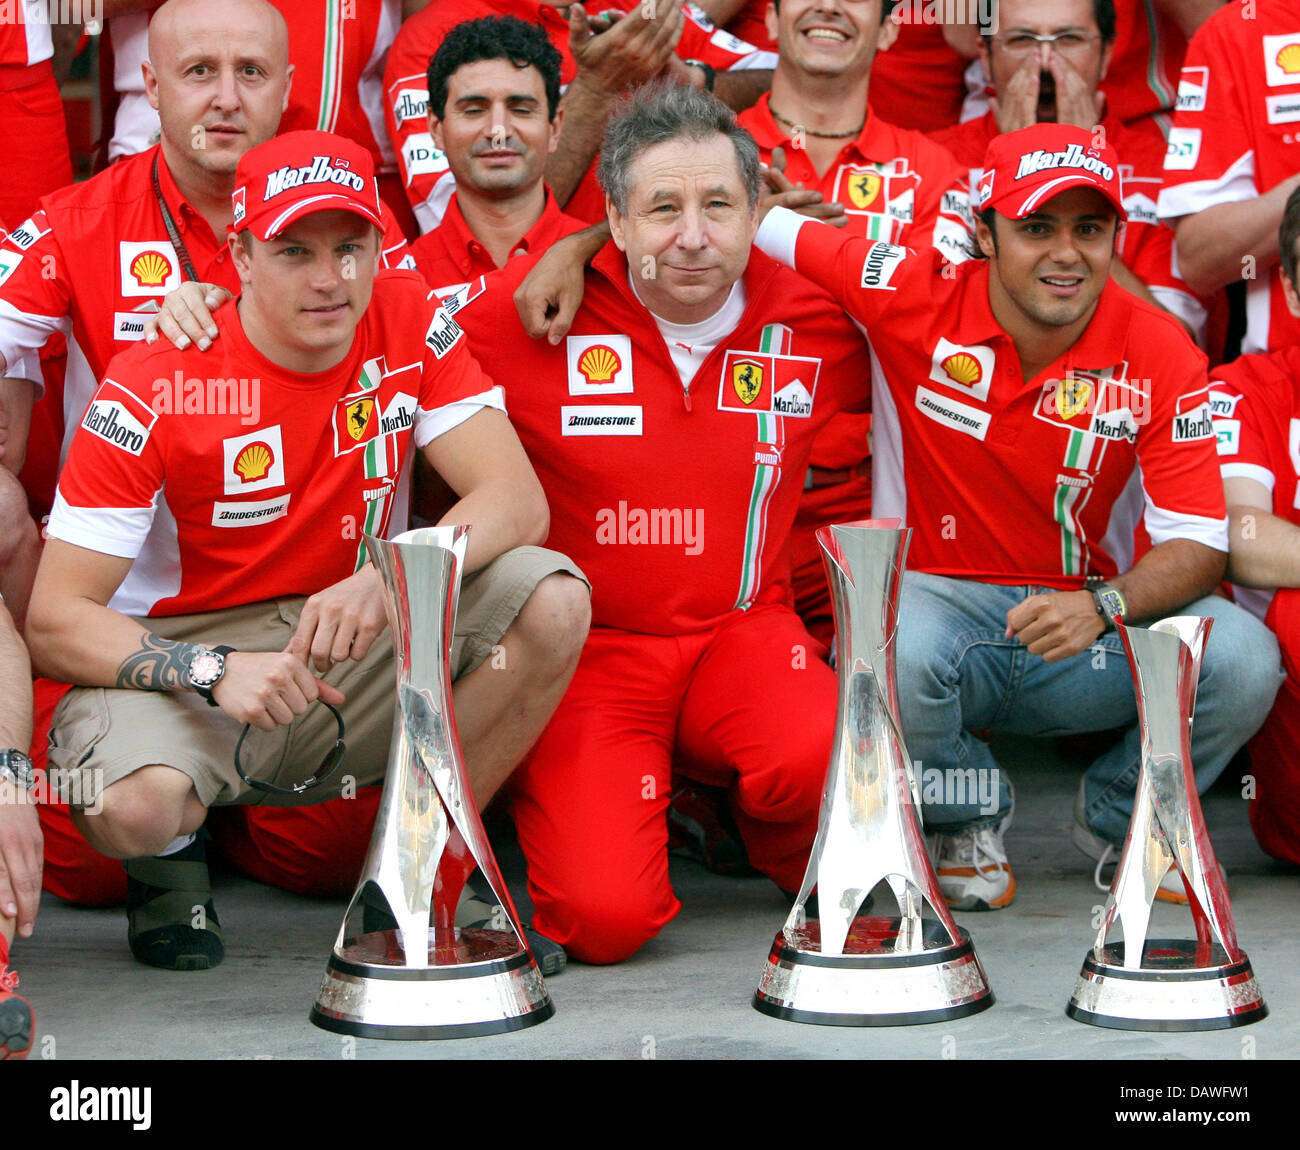 Ferrari team -Fotos und -Bildmaterial in hoher Auflösung – Alamy